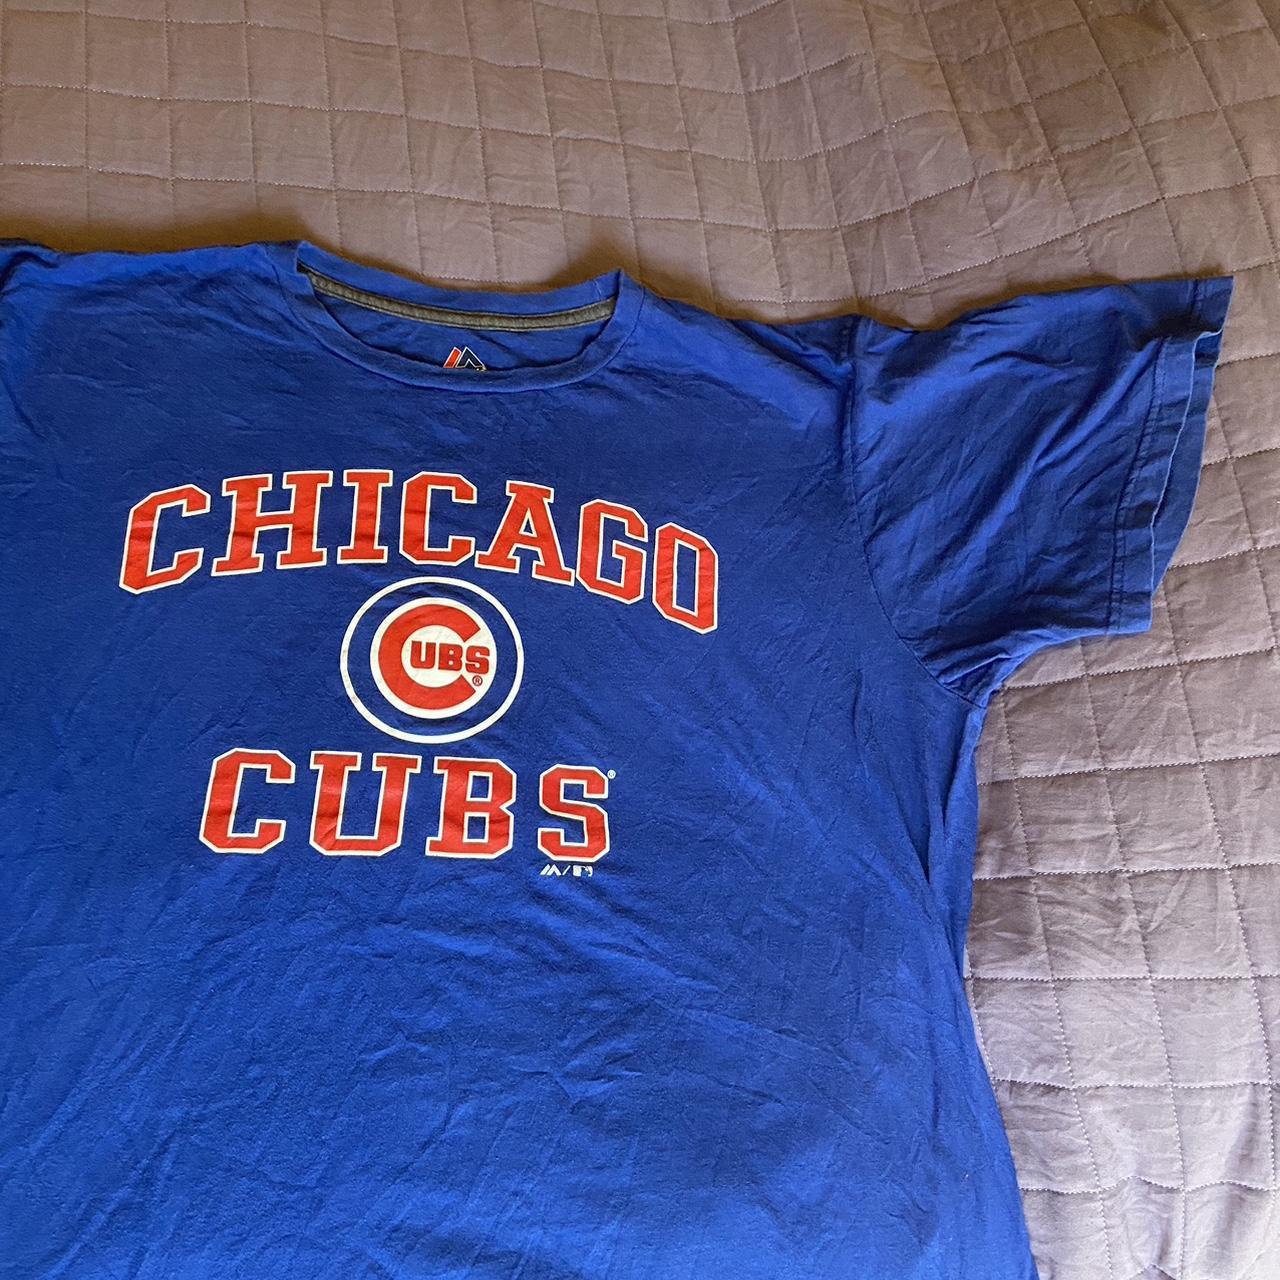 Vintage Chicago Cubs MLB Tee Used - Still great - Depop